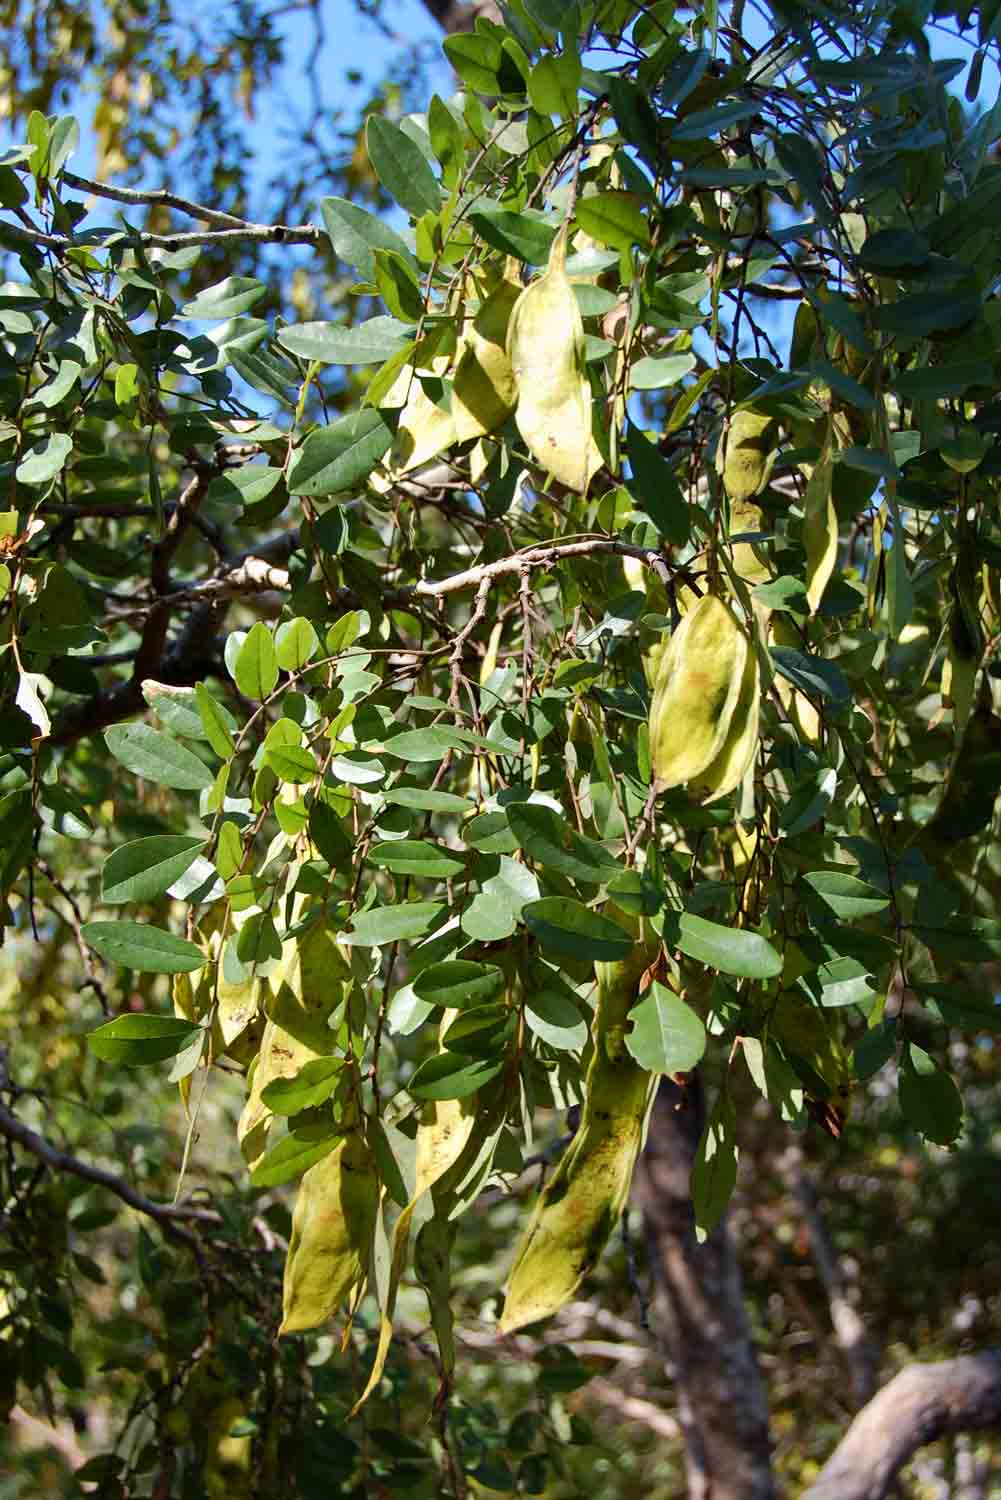 Pericopsis angolensis